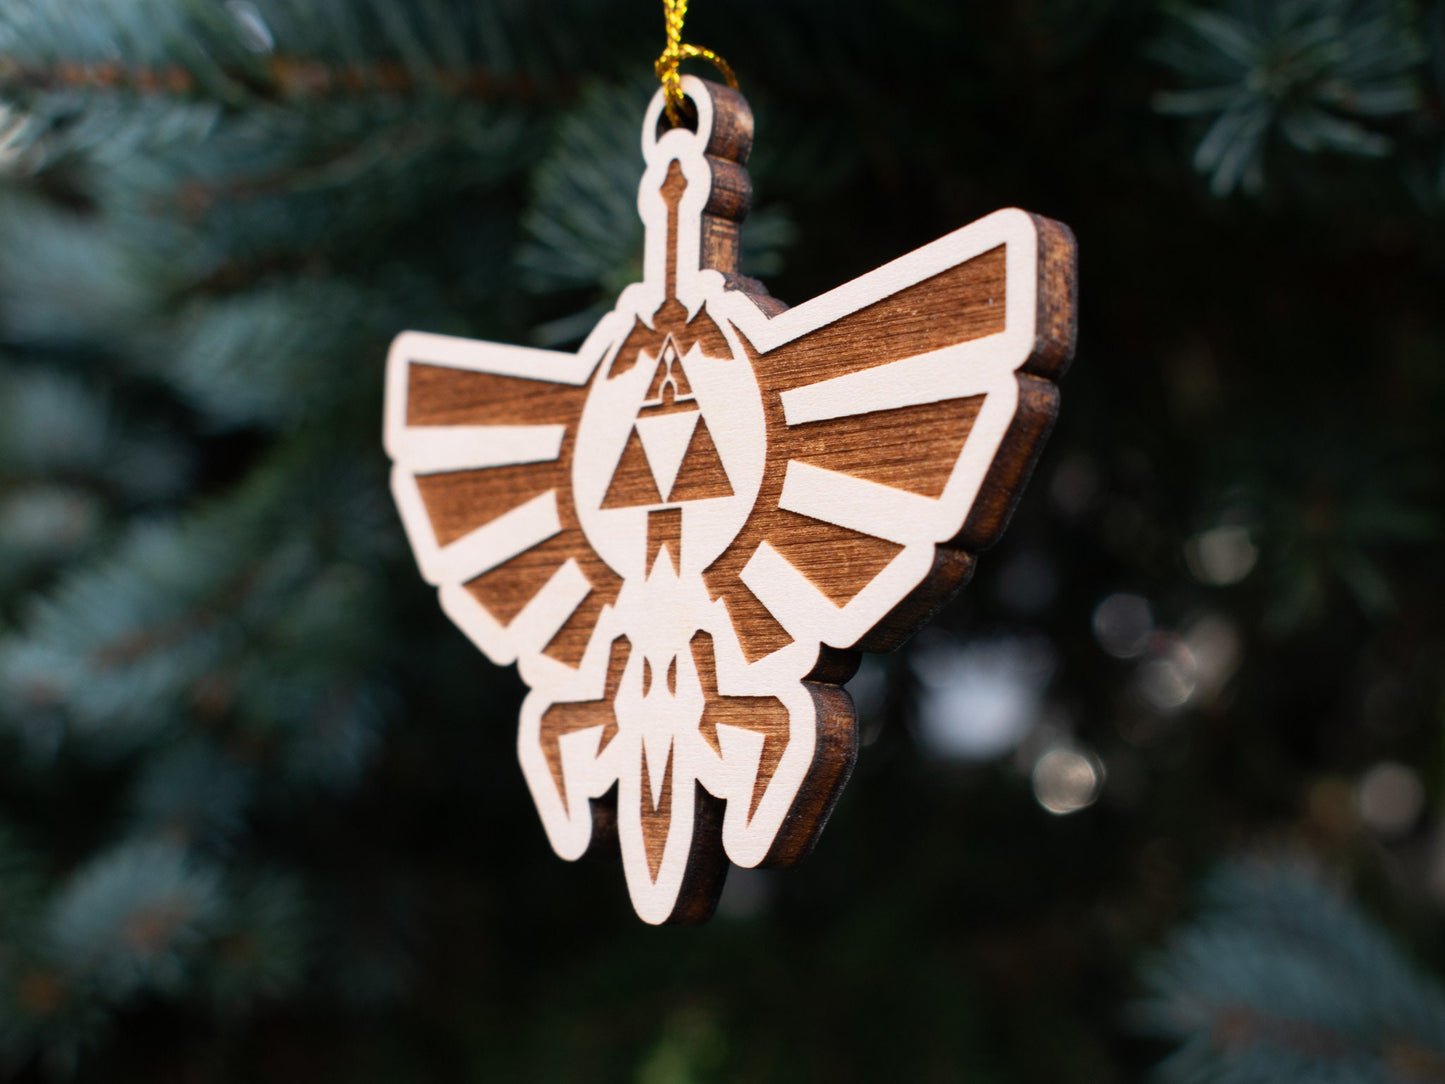 Zelda Ornament, Engraved Wood Zelda Christmas Ornament with Gold String